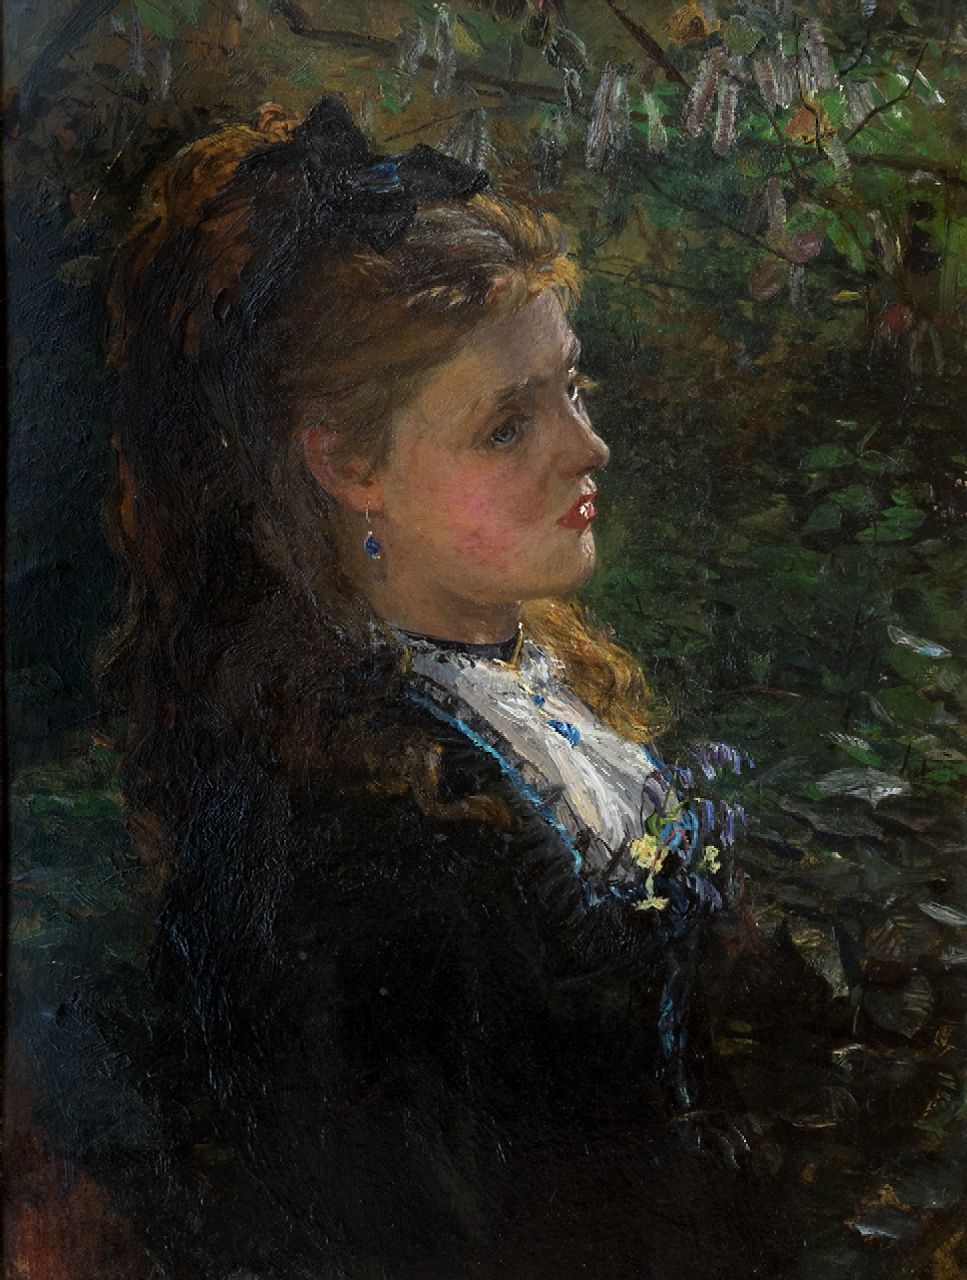 James Carroll Beckwith | Portrait of a young woman, ca 1875 probably the younge Émilie-Louise Delabigne (Valtesse de la Bigne)., oil on board, 40.0 x 30.0 cm, ca. 1875-1878